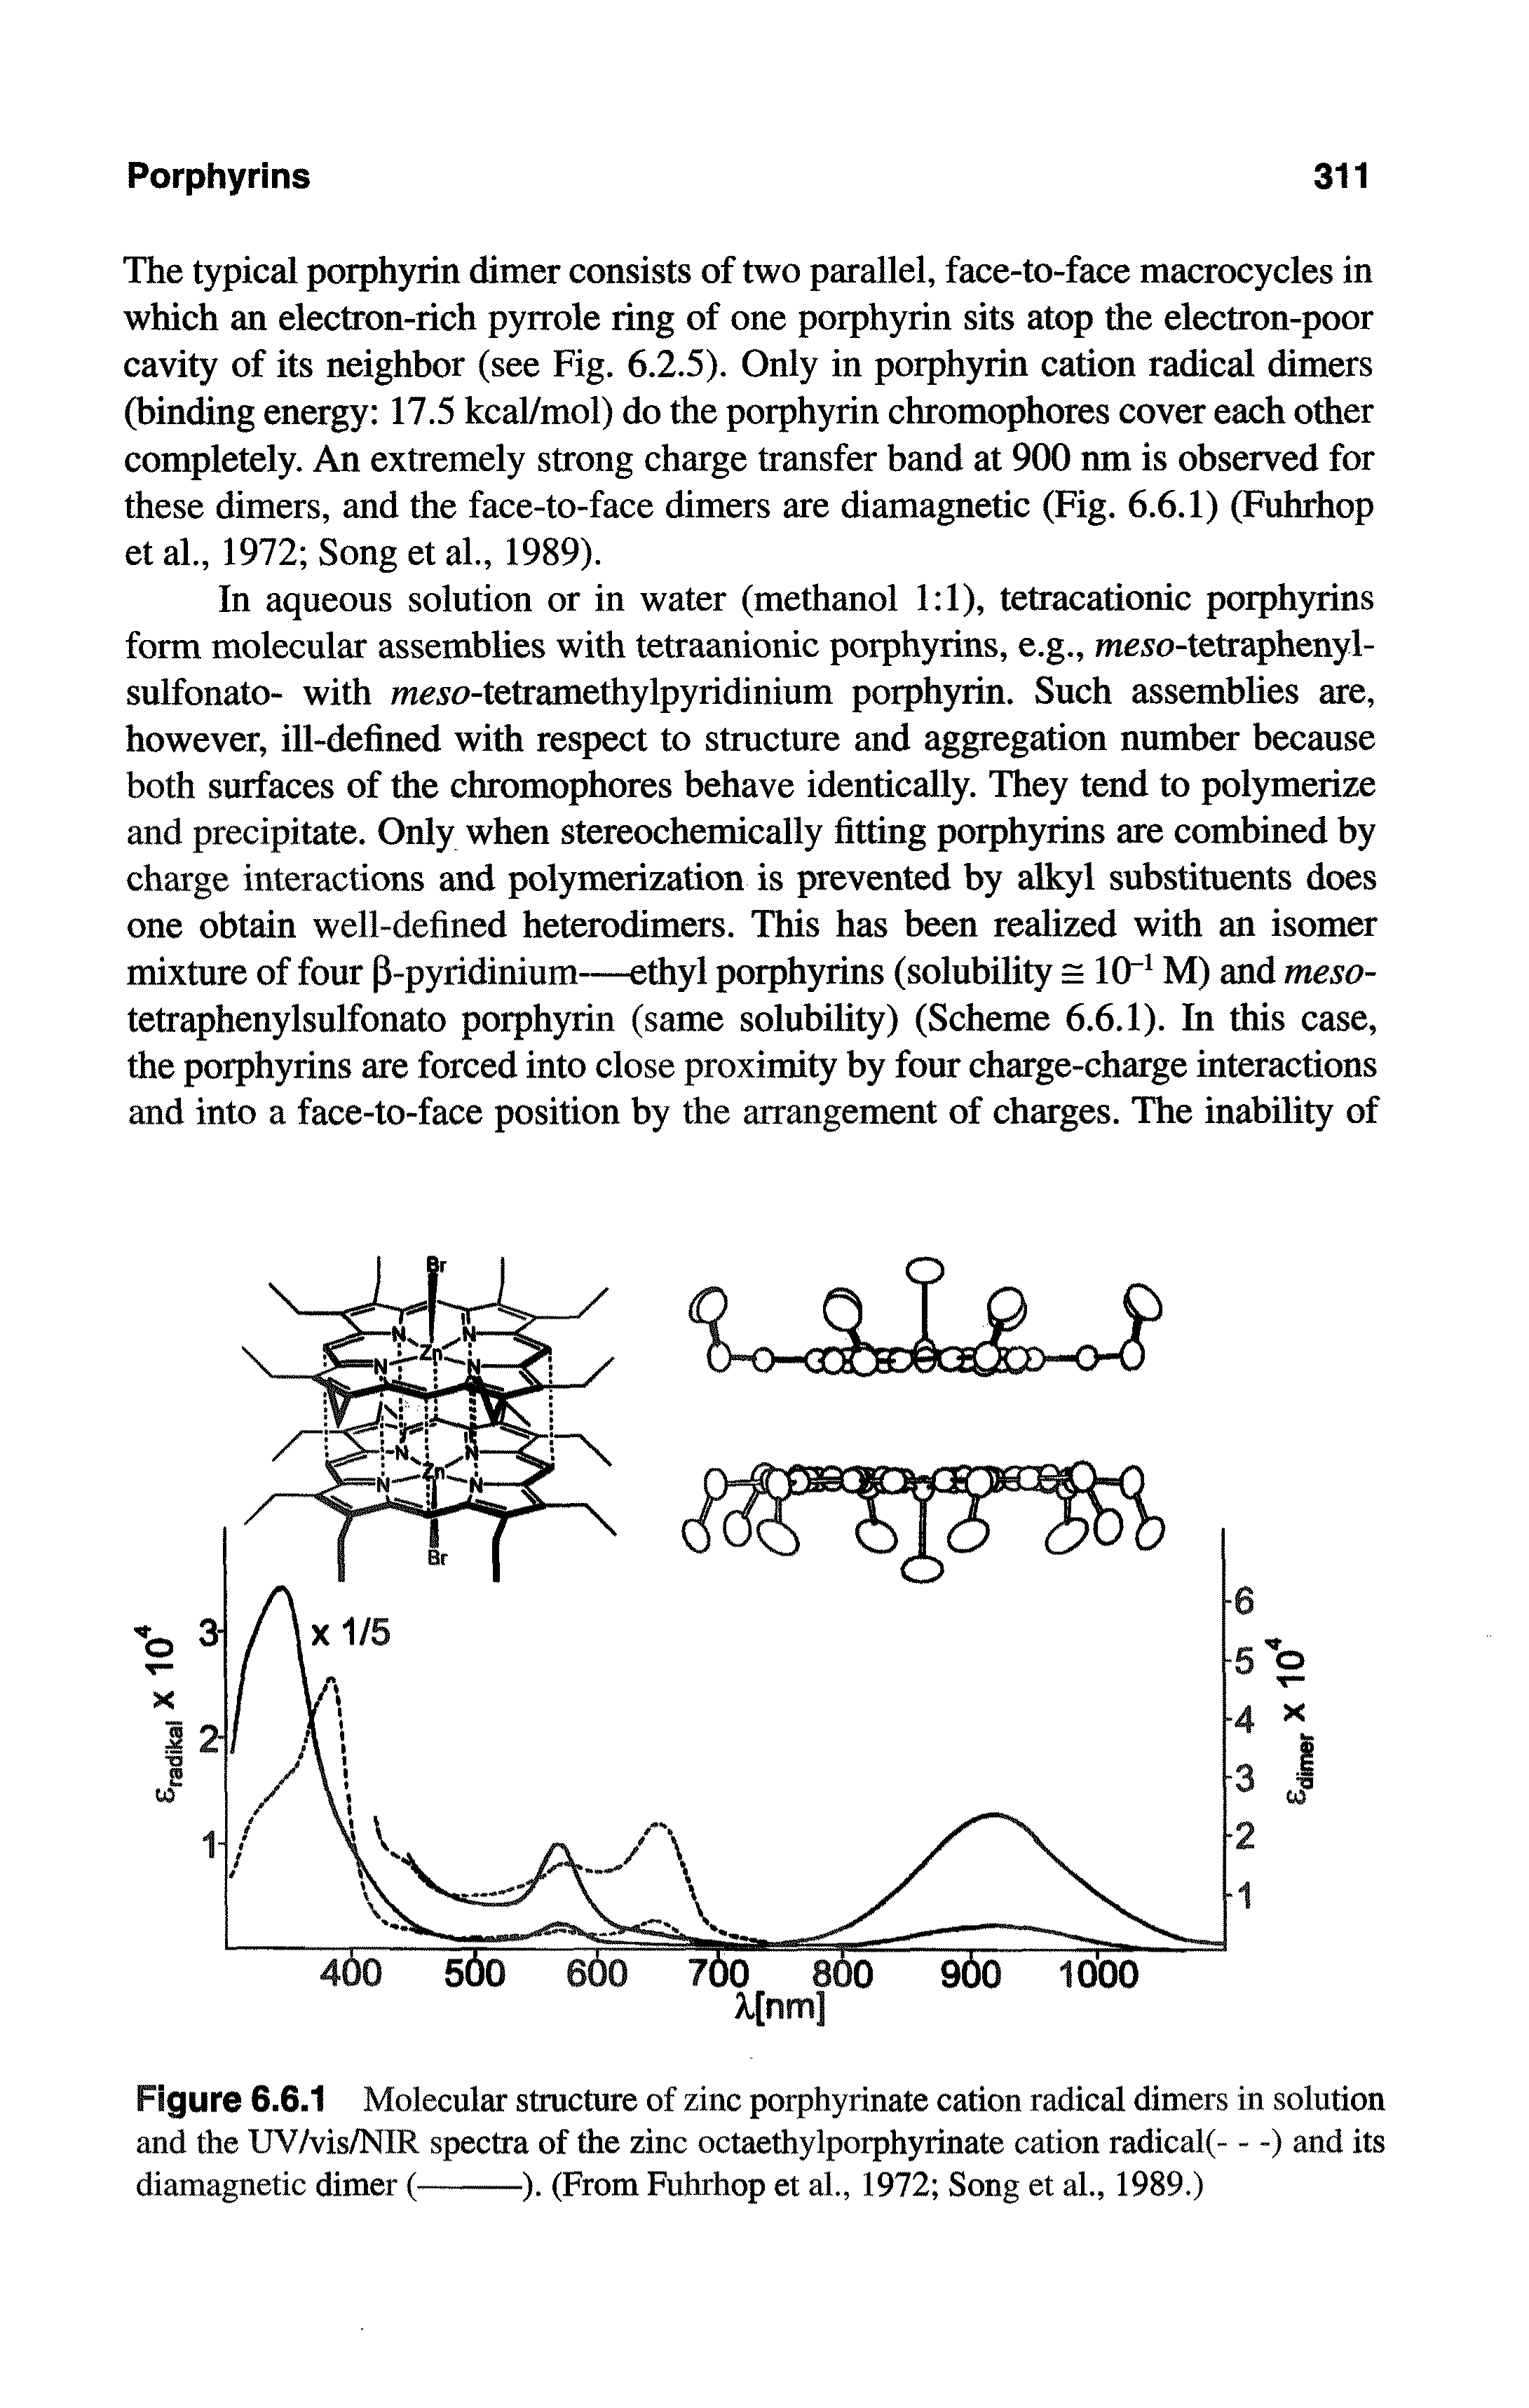 Figure 6.6.1 Molecular structure of zinc porphyrinate cation radical dimers in solution and the UV/vis/NIR spectra of the zinc octaethylporphyrinate cation radical —) and its diamagnetic dimer (-------). (From Fuhrhop et al, 1972 Song et al, 1989.)...